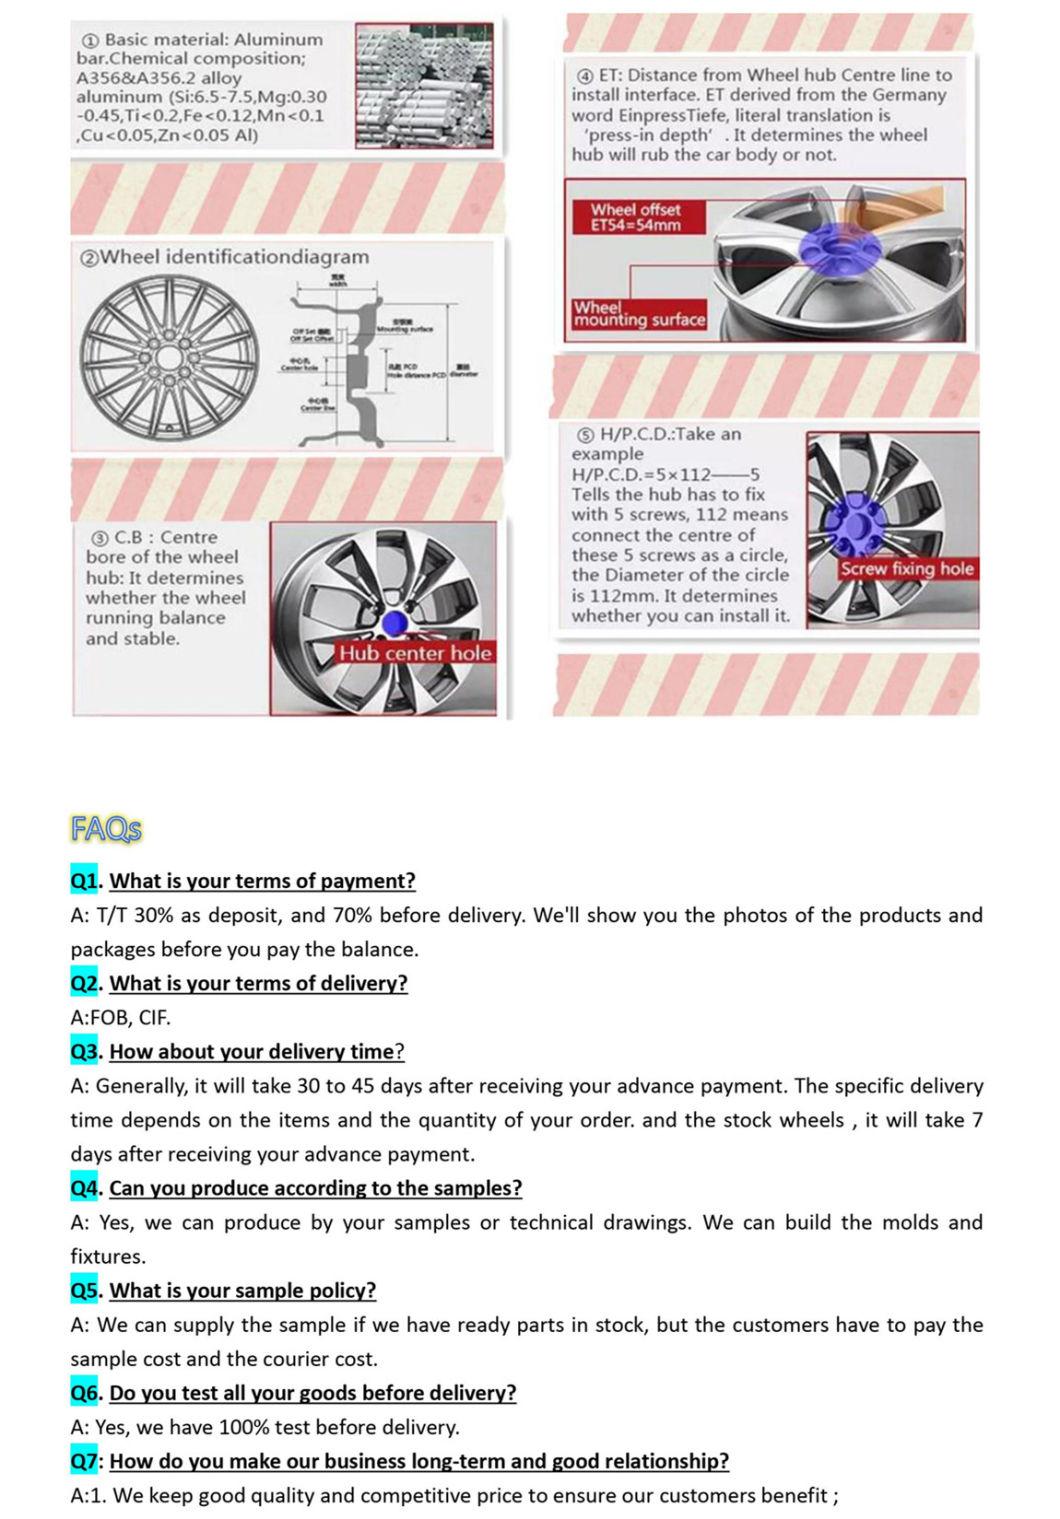 Best Selling Replica Wheel for Mercury Passenger Car Alloy Wheel Full Size Available